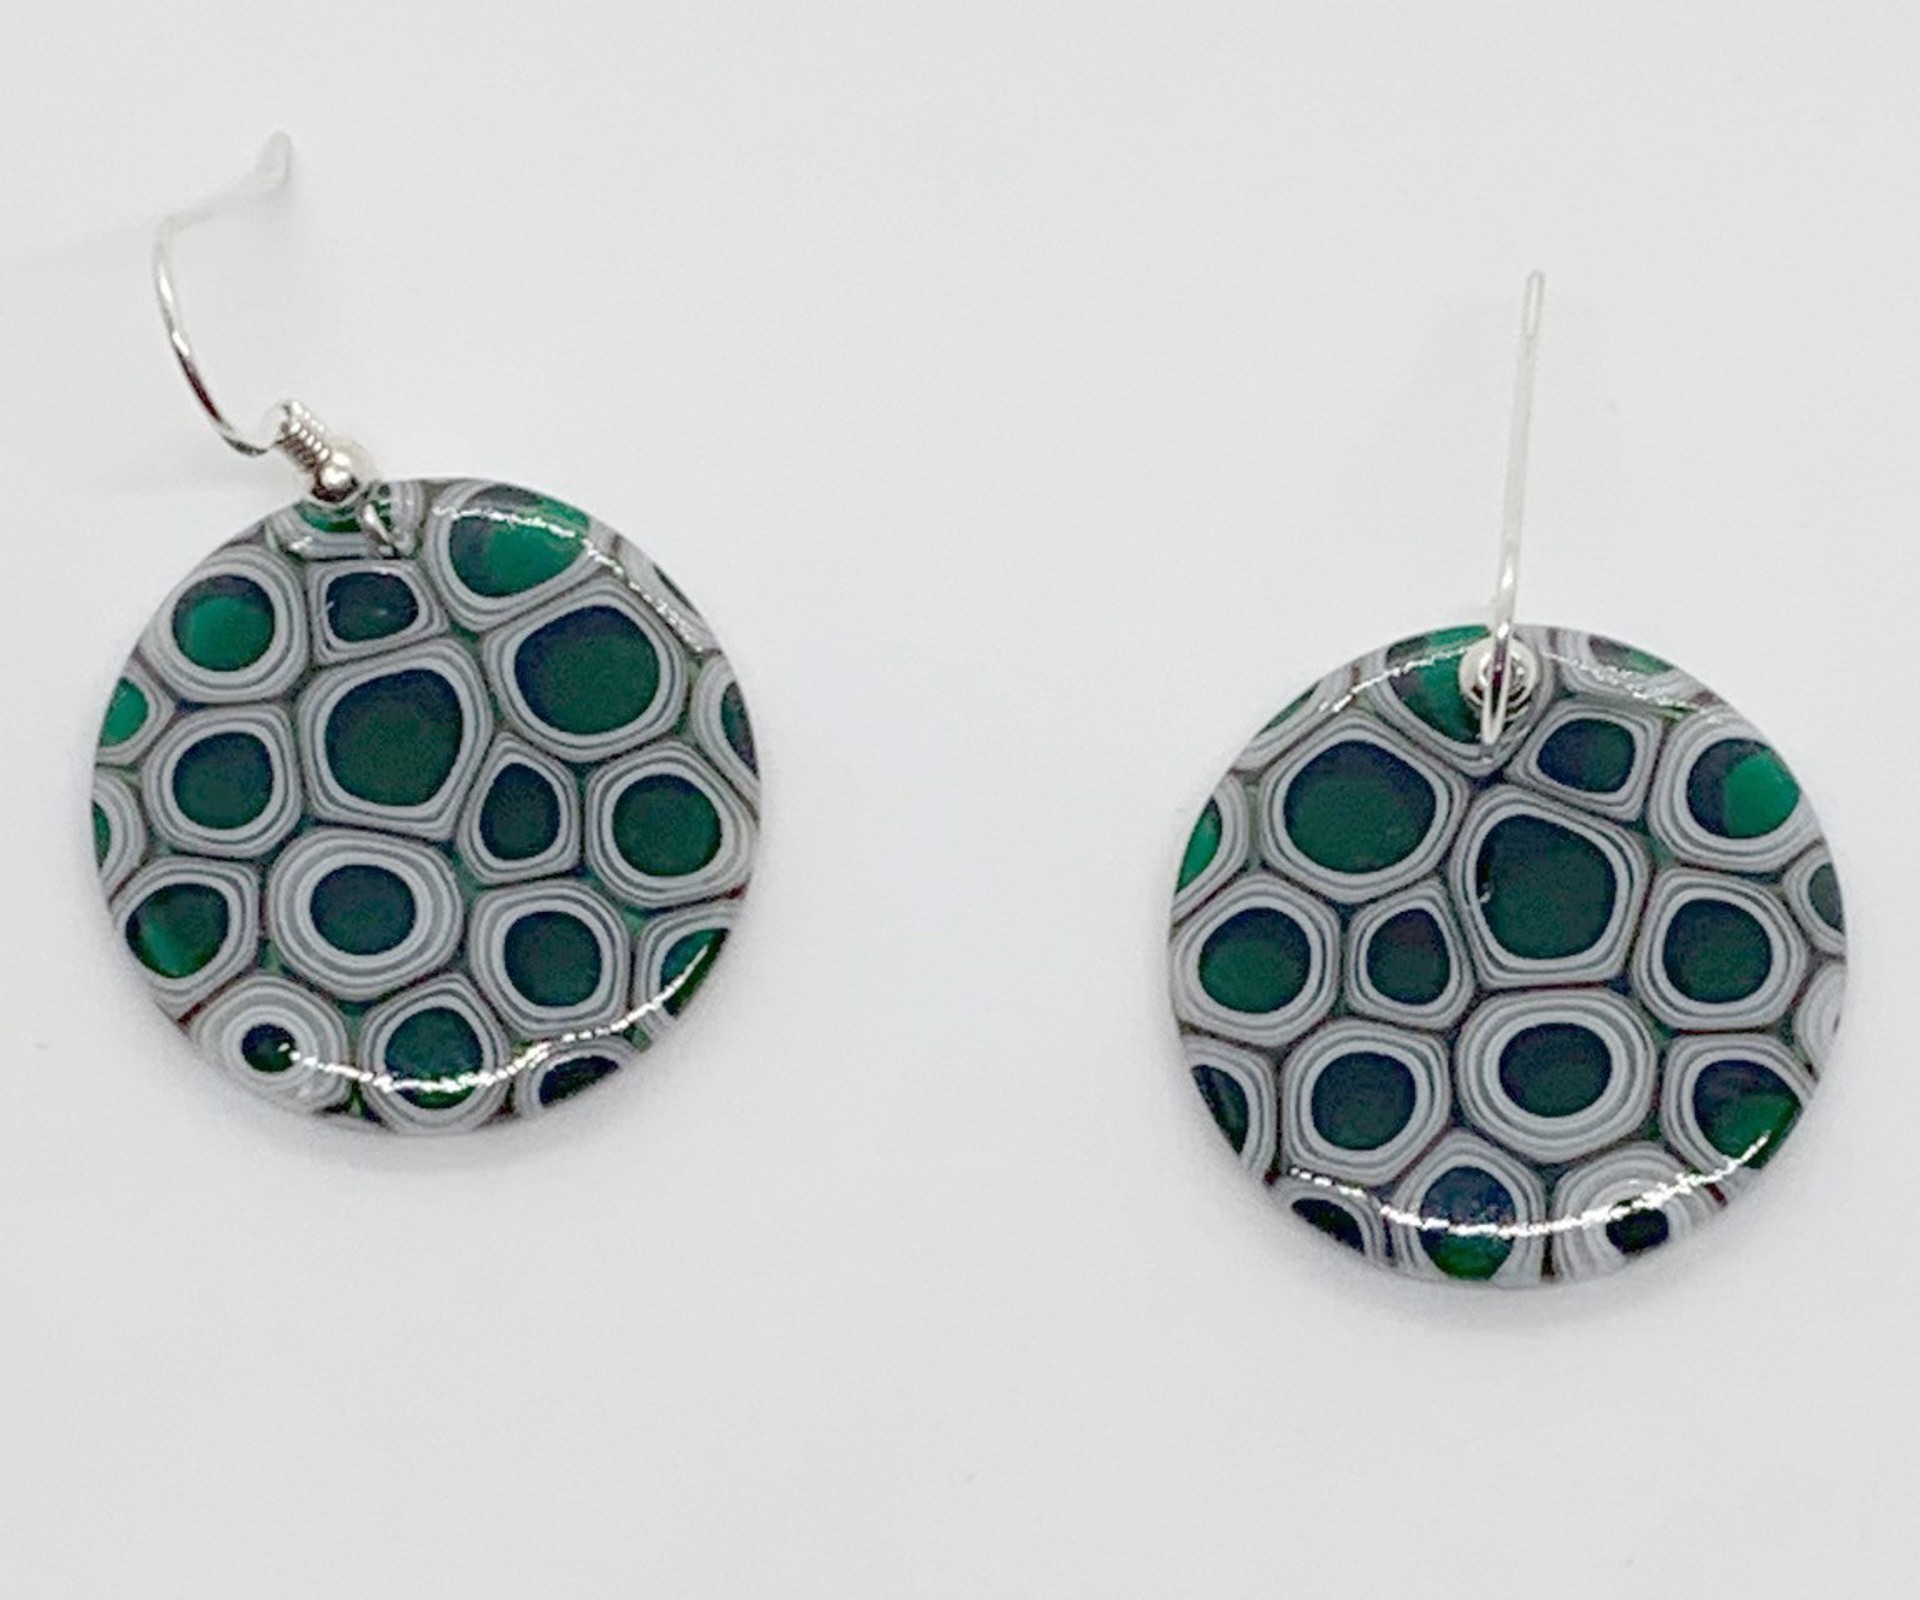 Murrini round earrings by Chris Cox